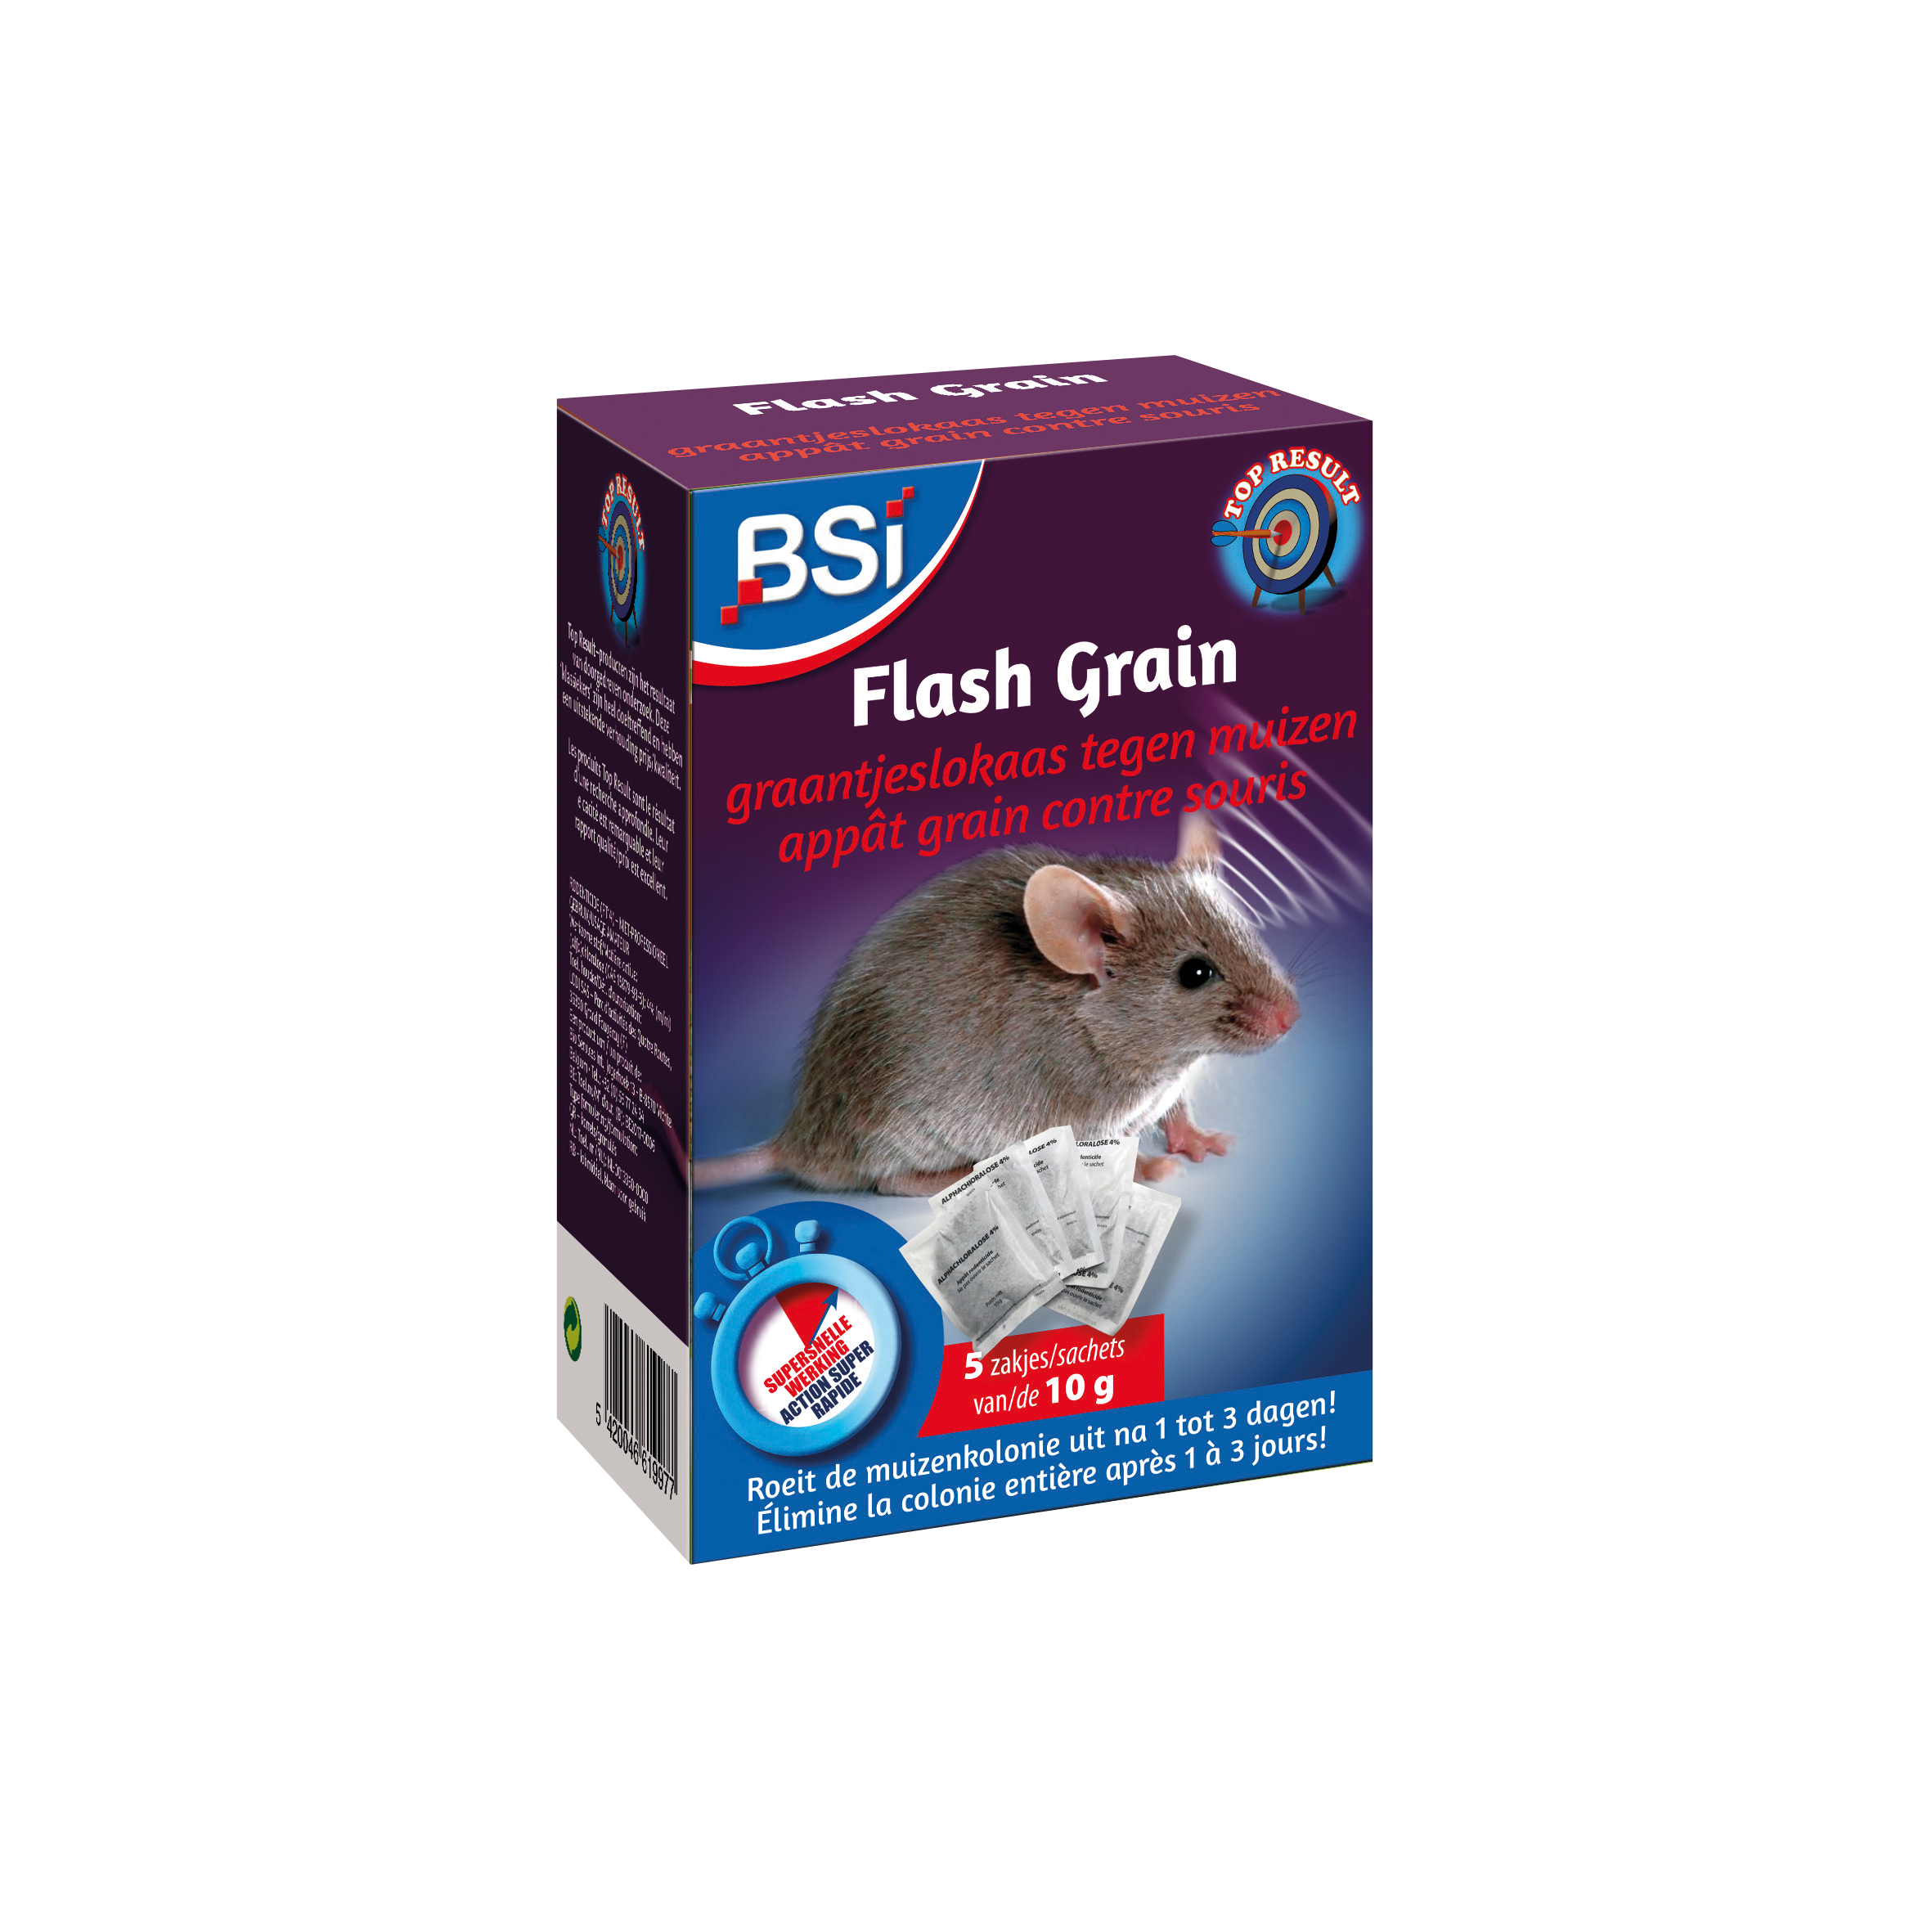 BSI Flash Grain  5 x 10 g image